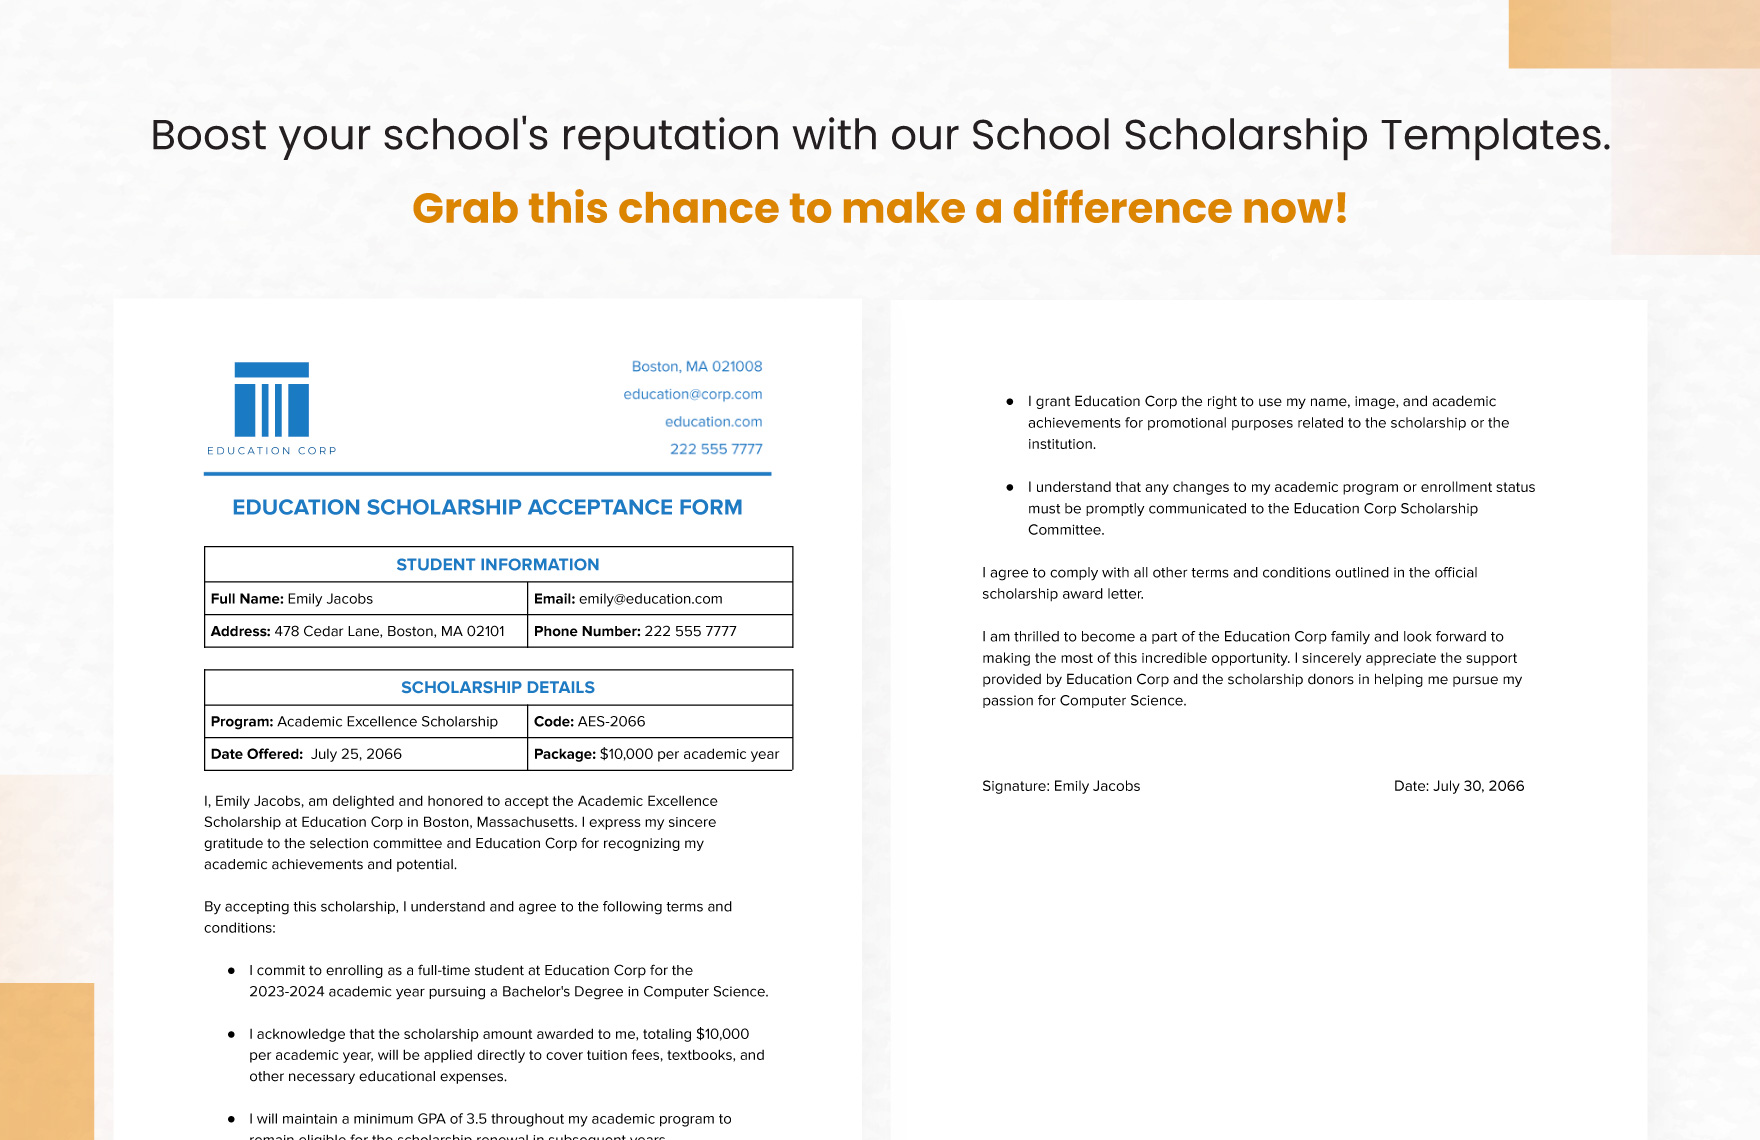 Education Scholarship Acceptance Form Template